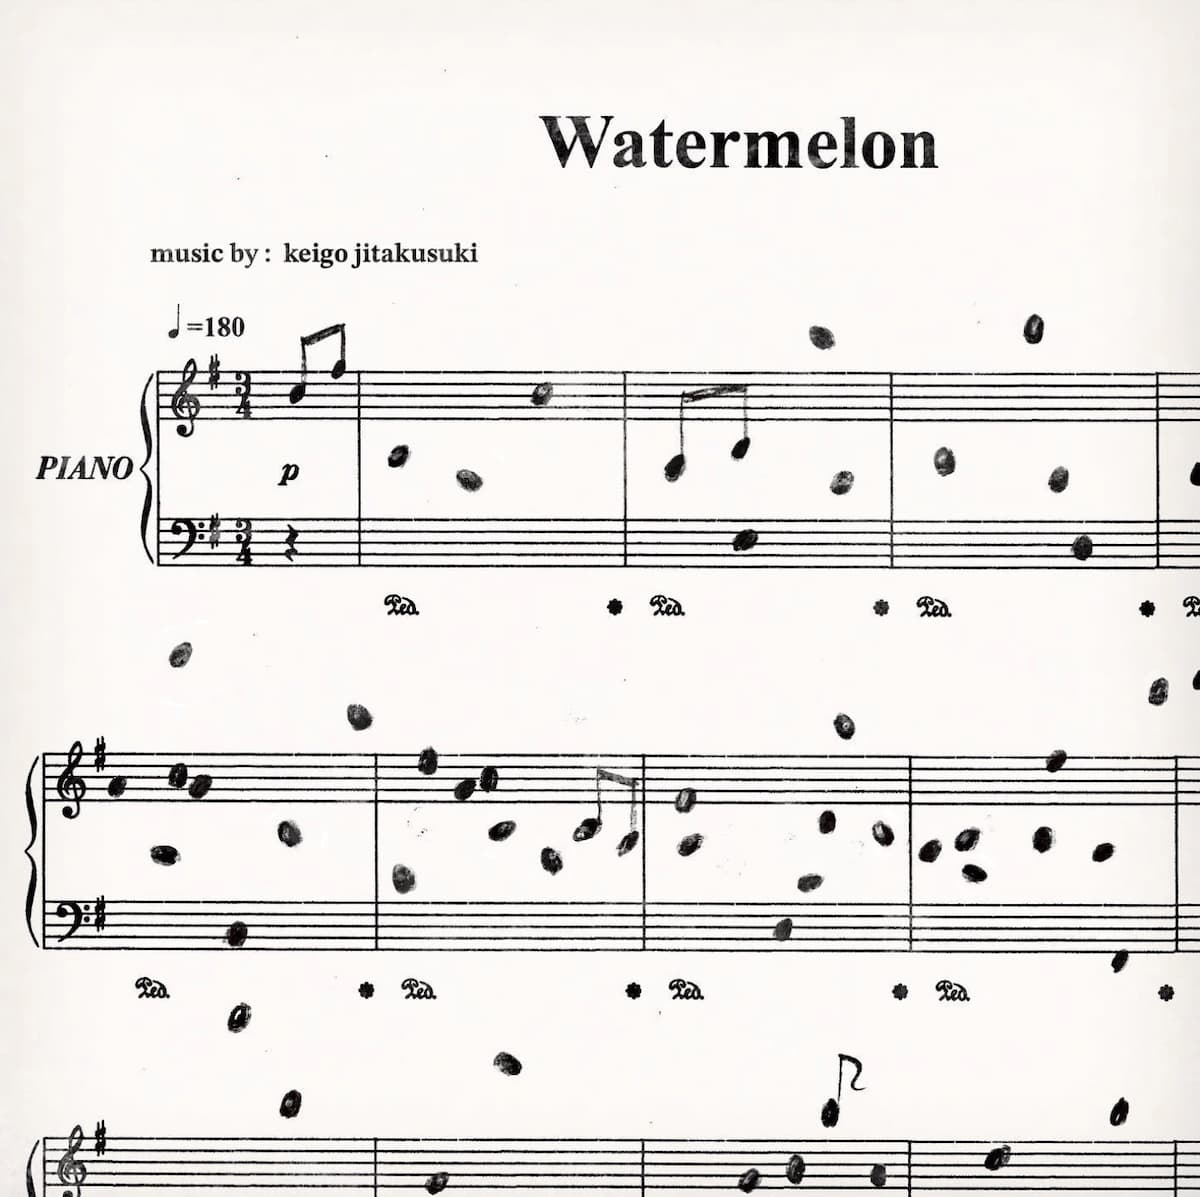 Watermelon music joke